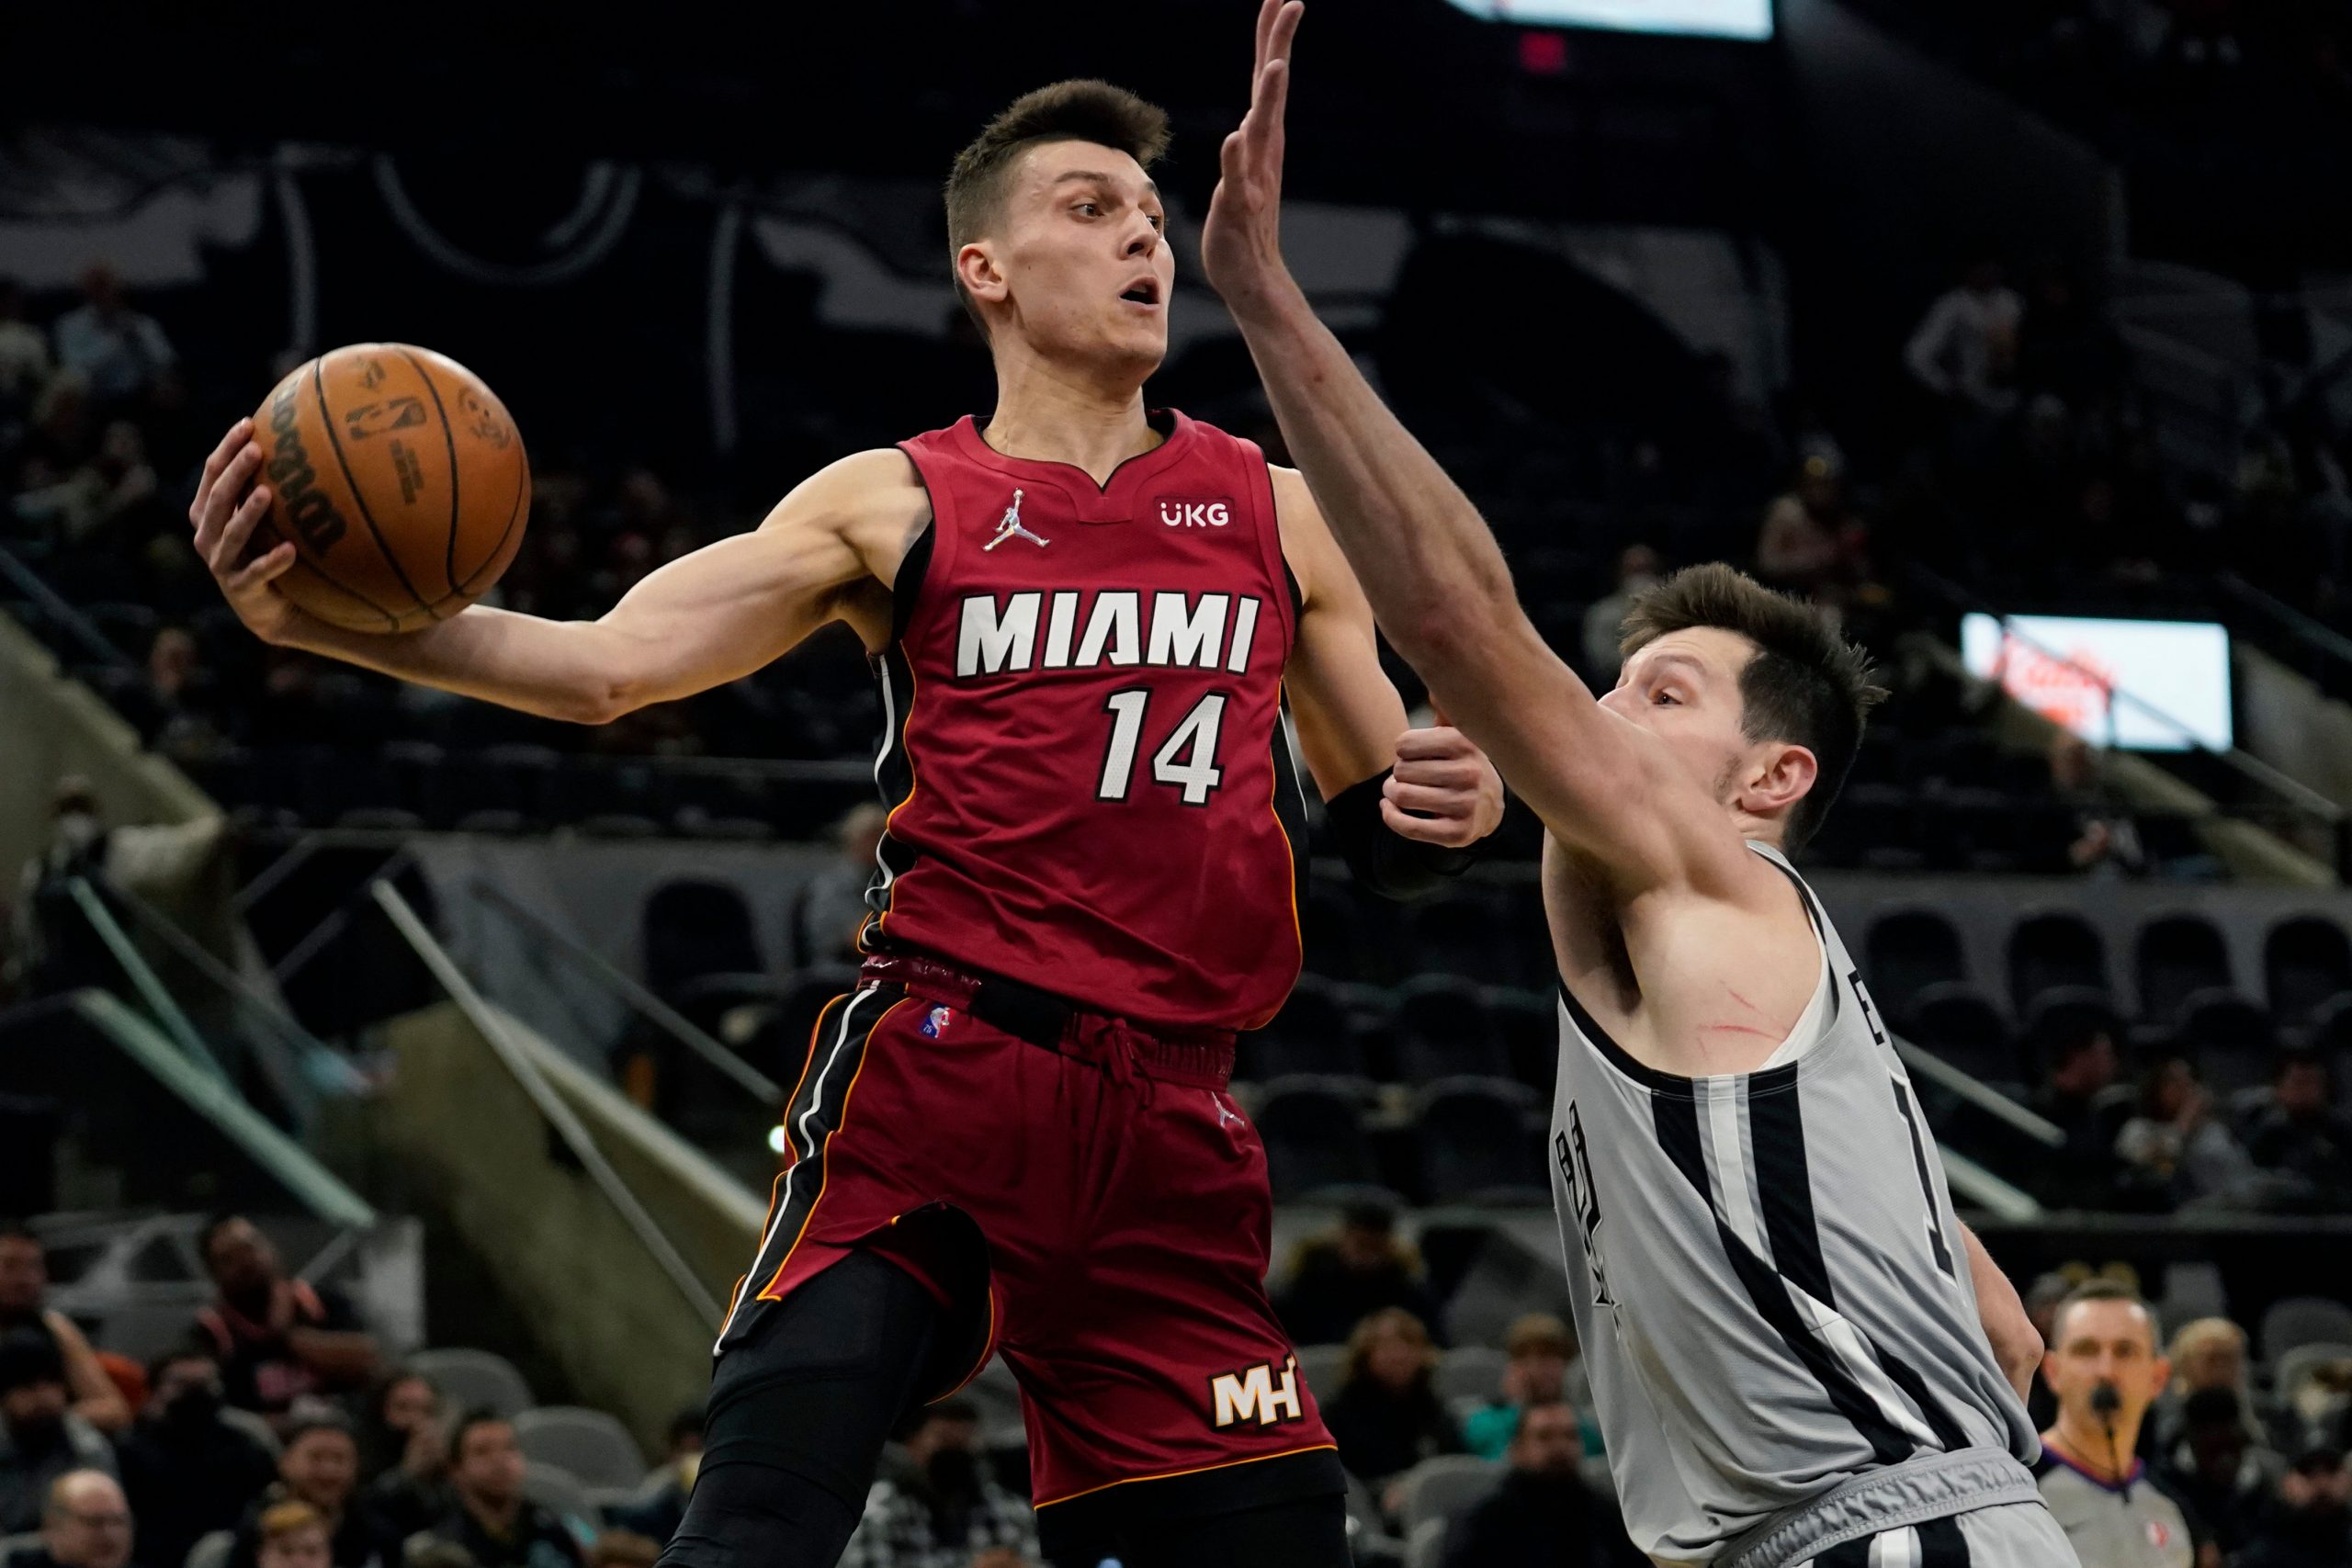 NBA: Tyler Herro, Miami Heat dominate short-handed San Antonio Spurs 112-95 to end skid